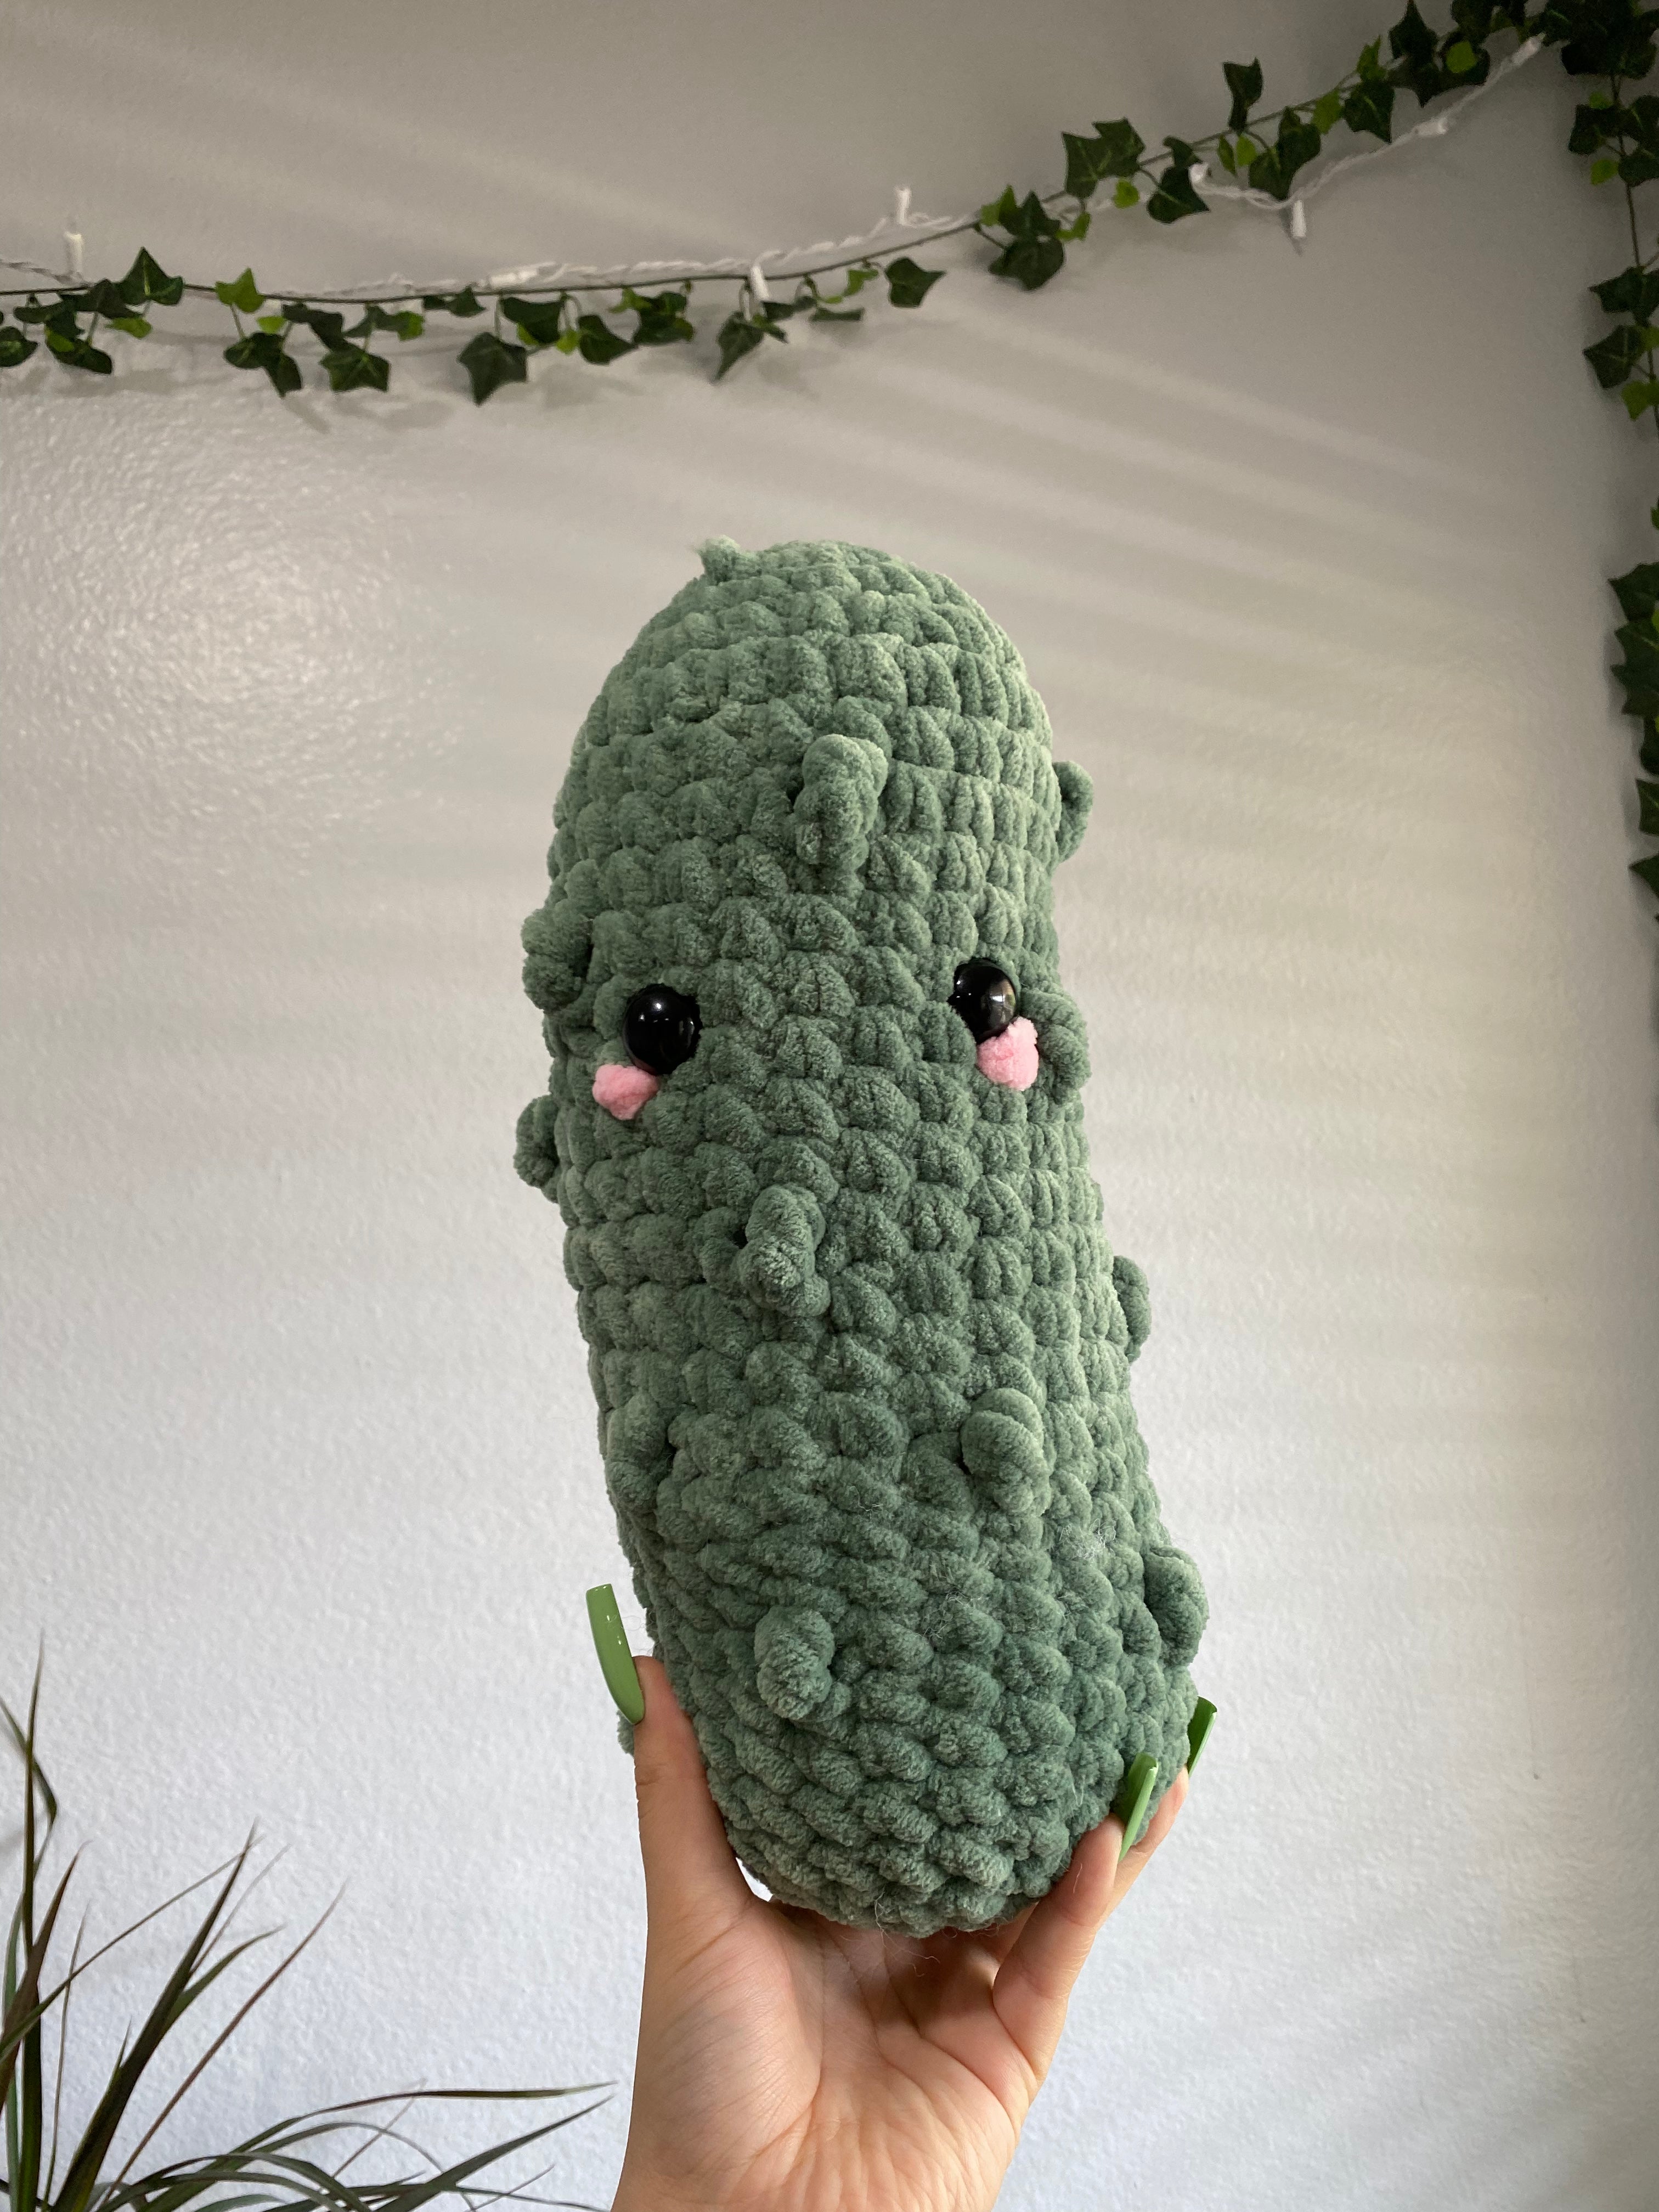 Jumbo Crochet Pickle